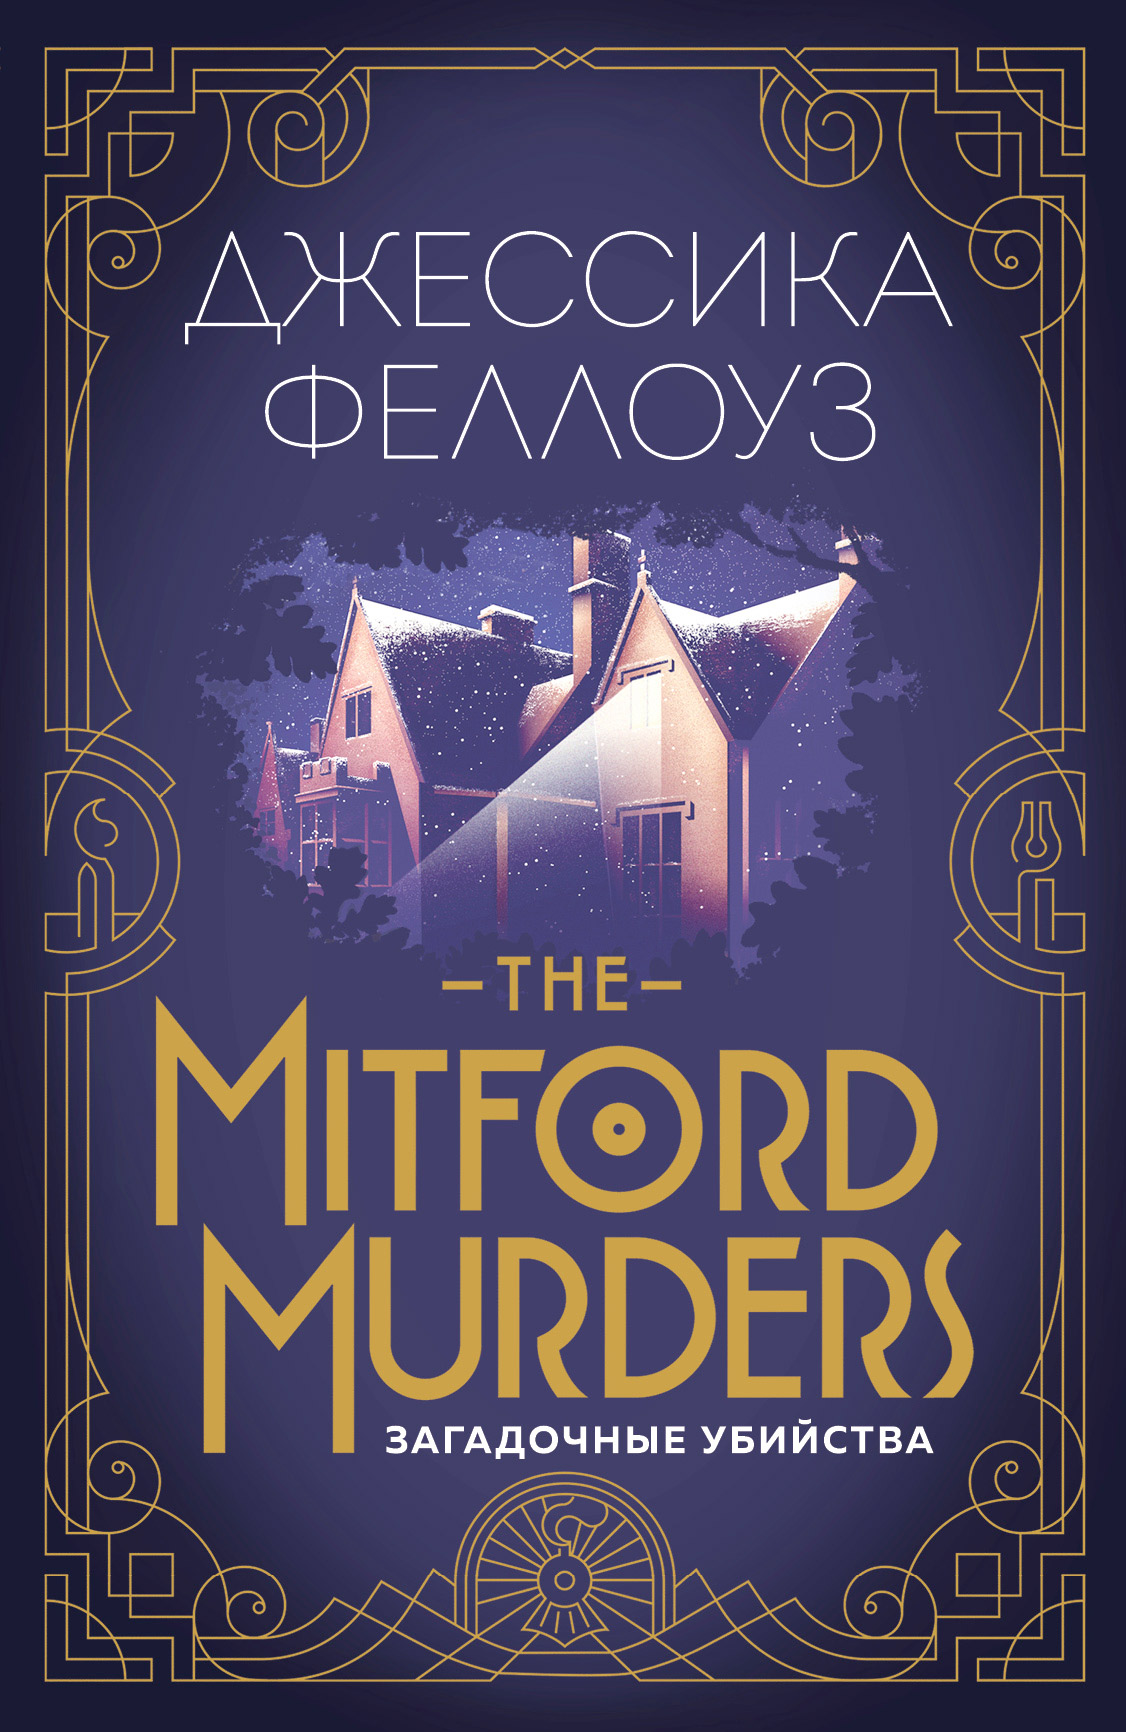 The Mitford murders.Загадочные убийства